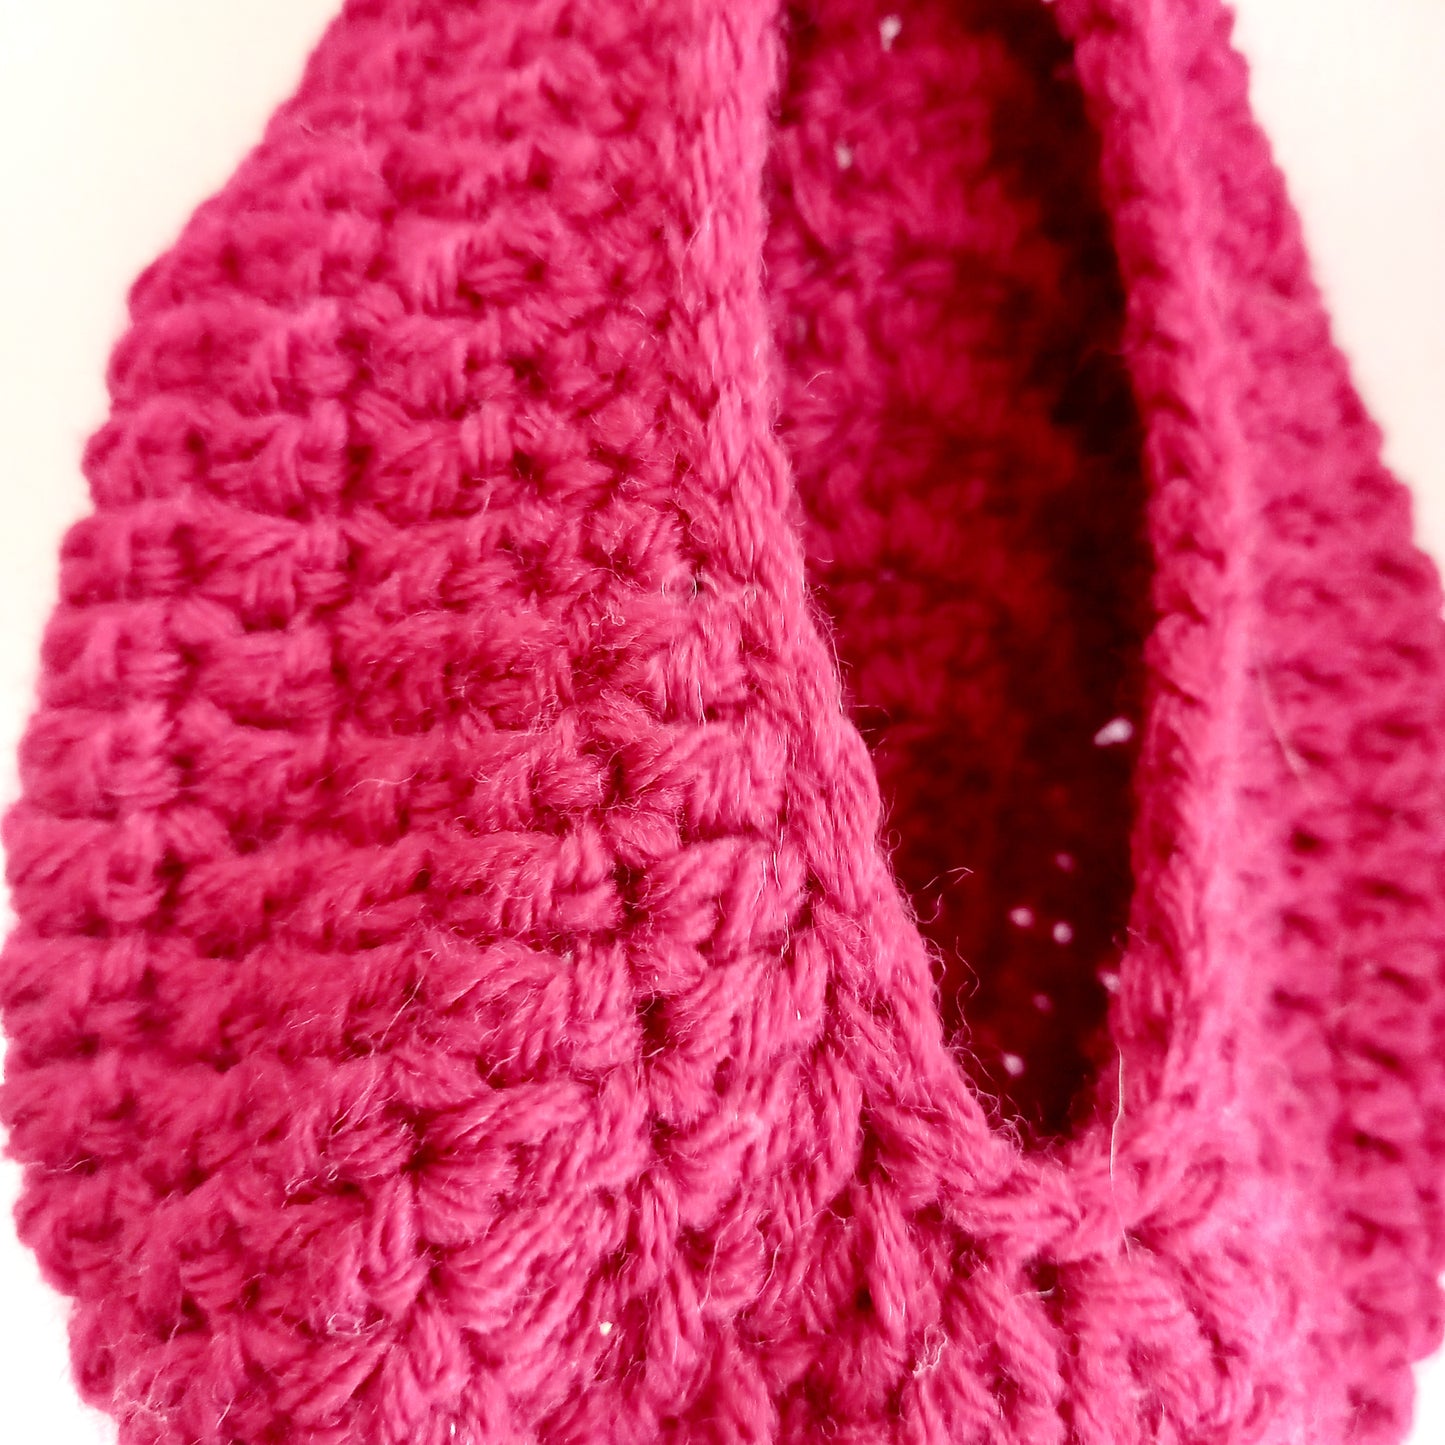 "Handmade Crochet Storage Pods (small)"